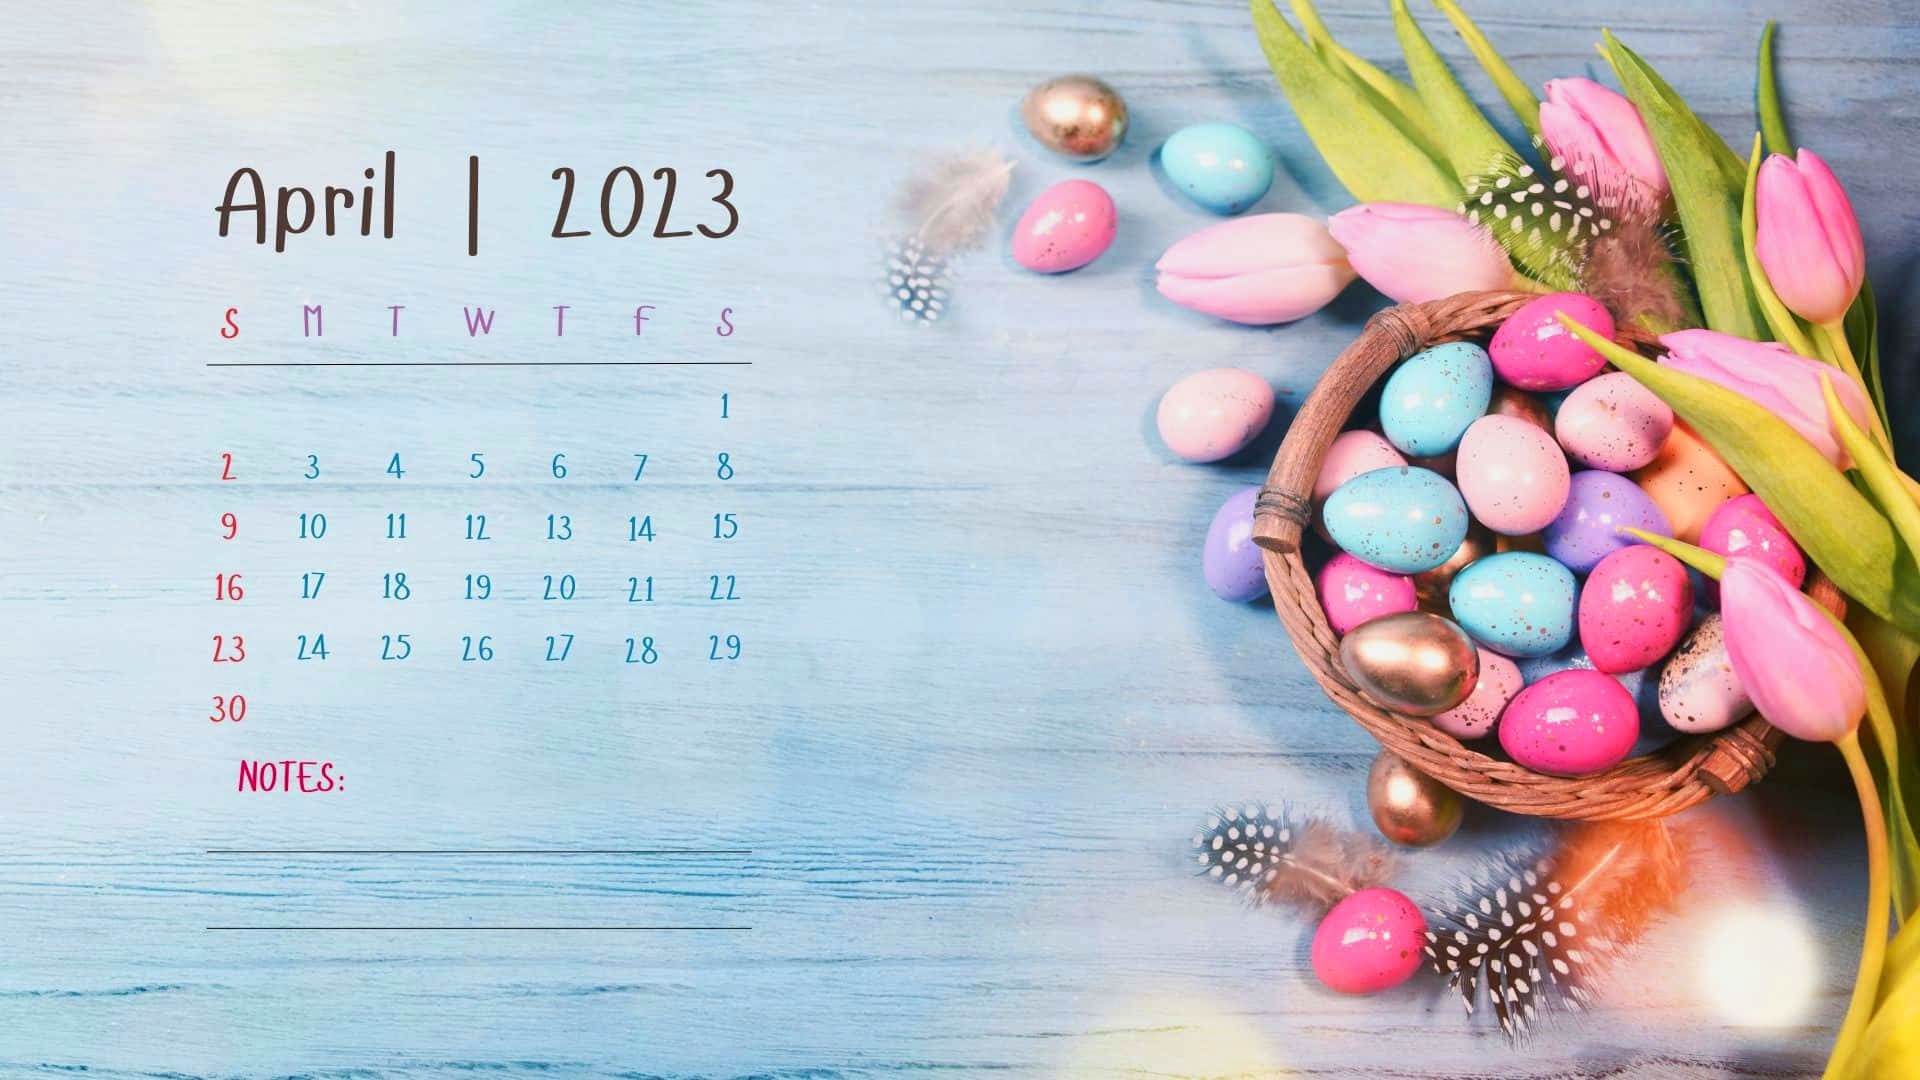 April Calendar 2023 Wallpapers